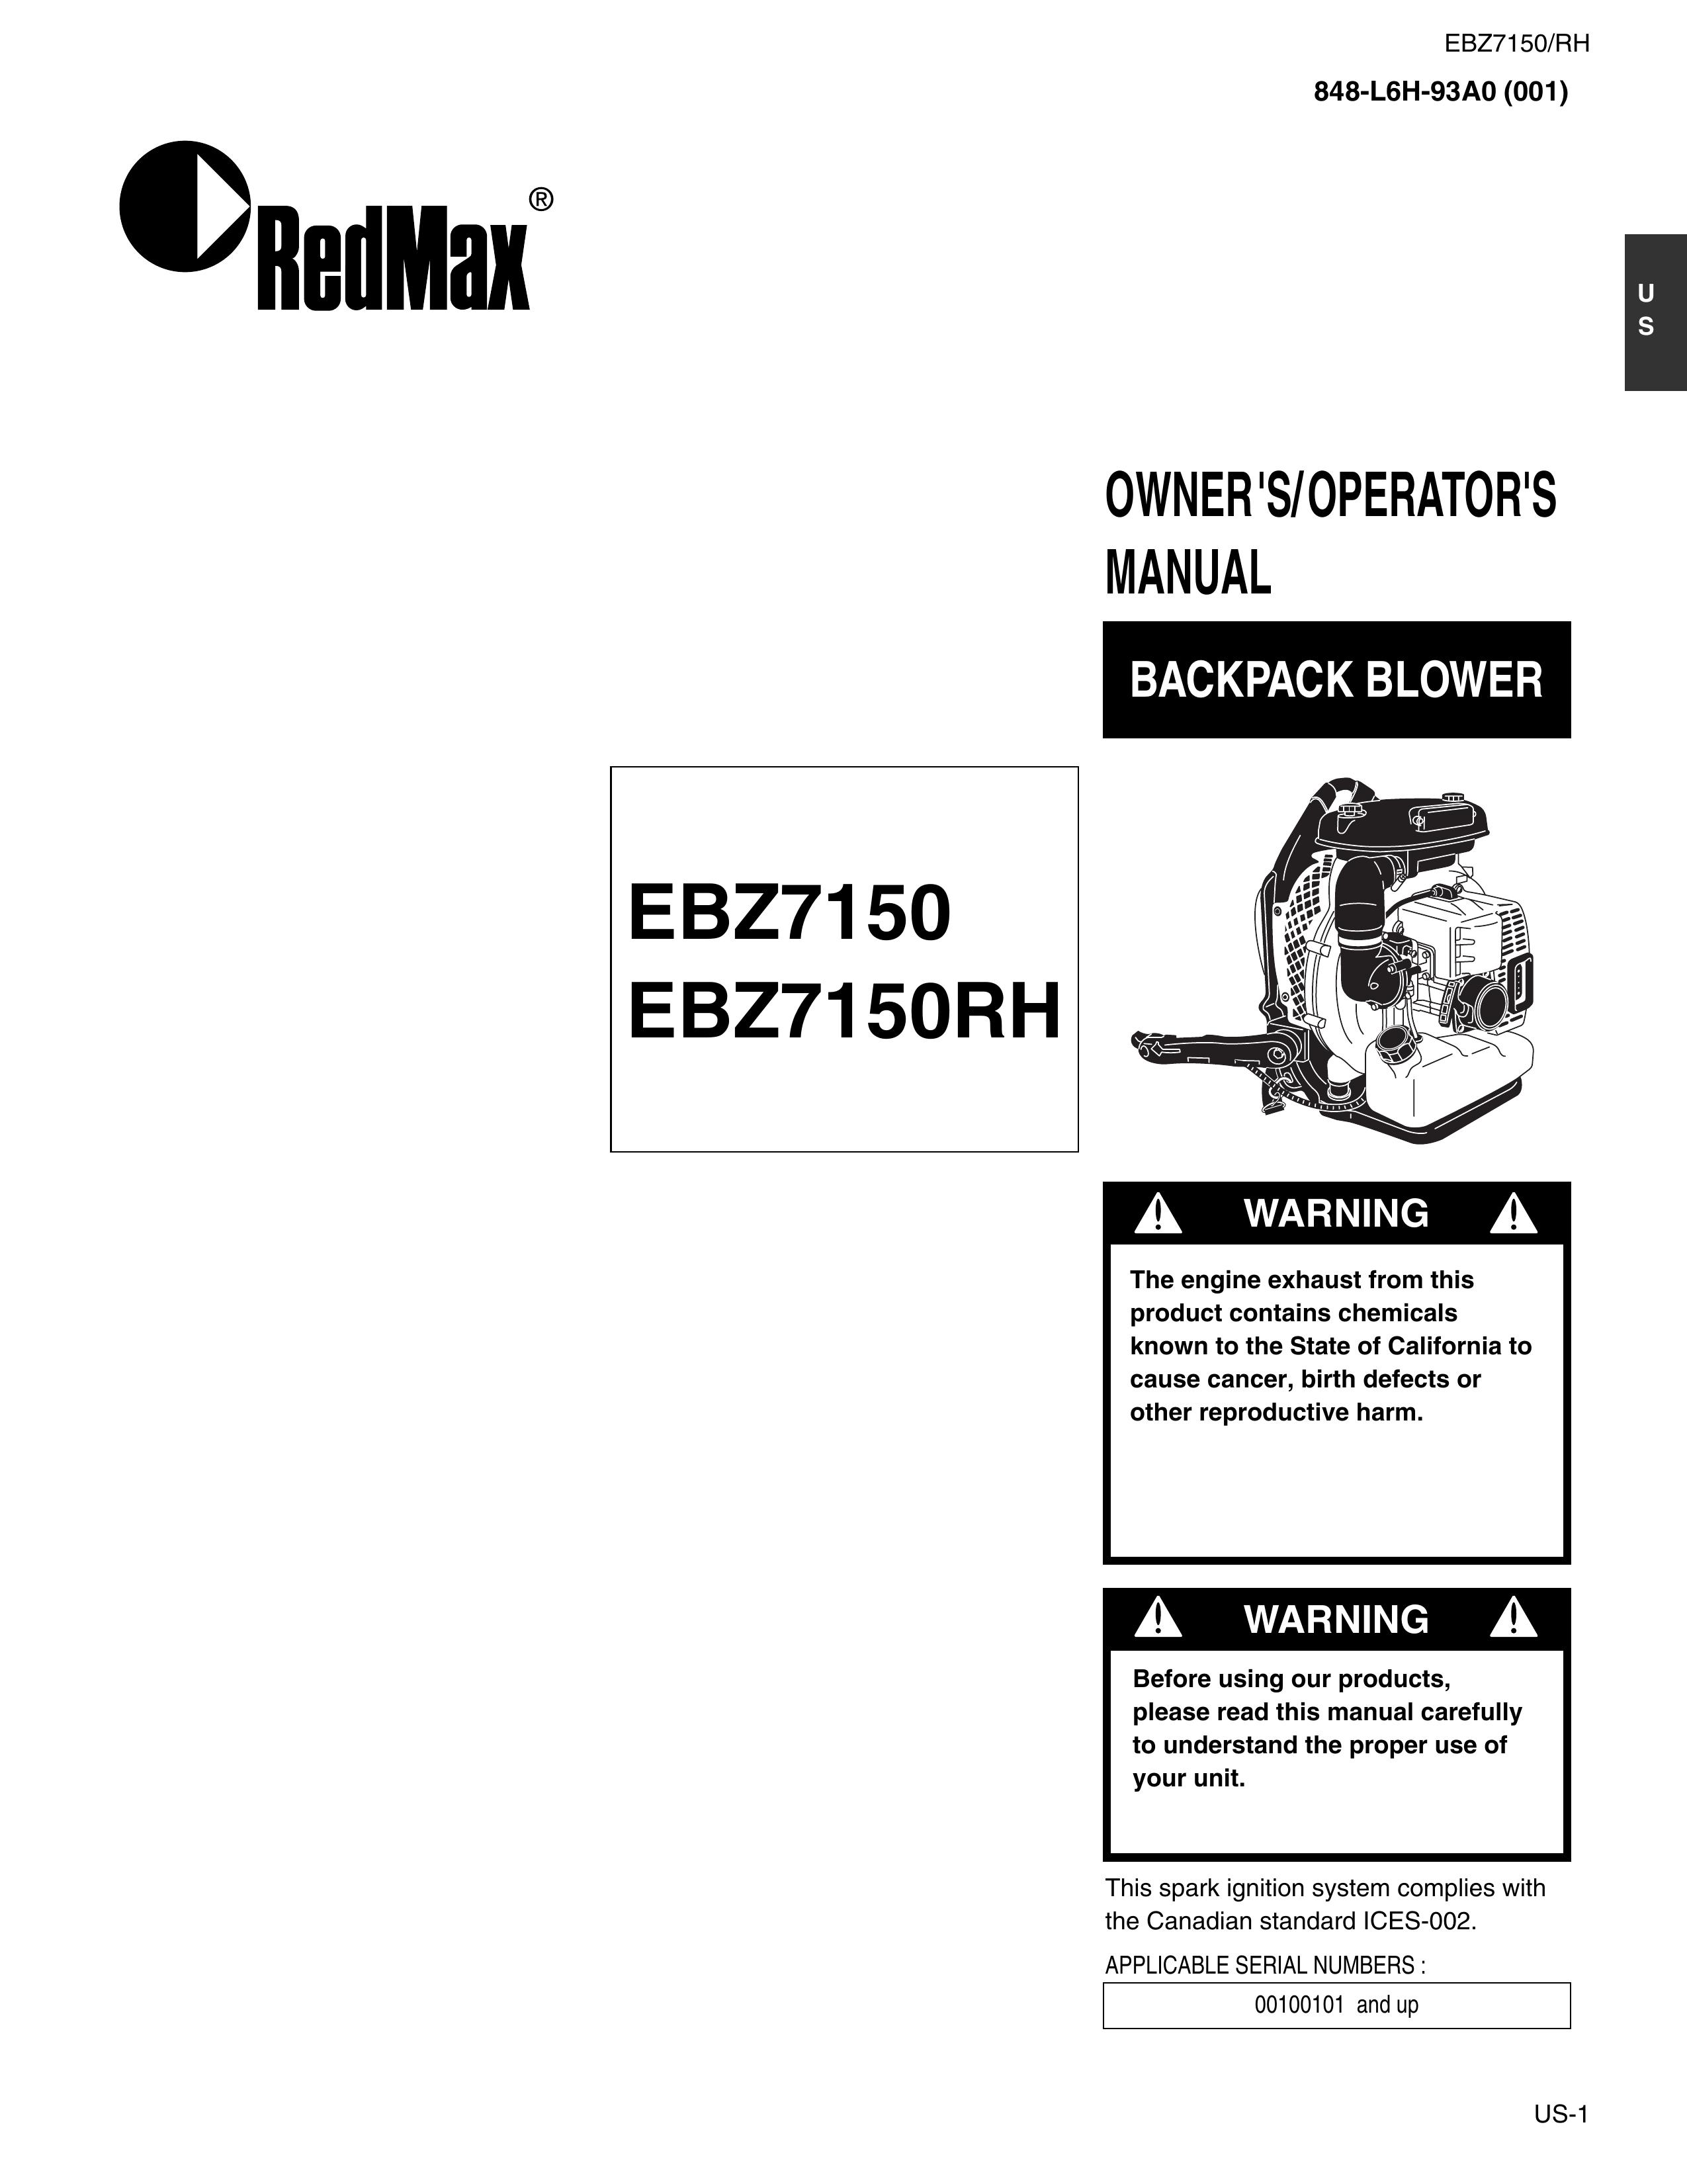 RedMax EBZ7150 Blower User Manual